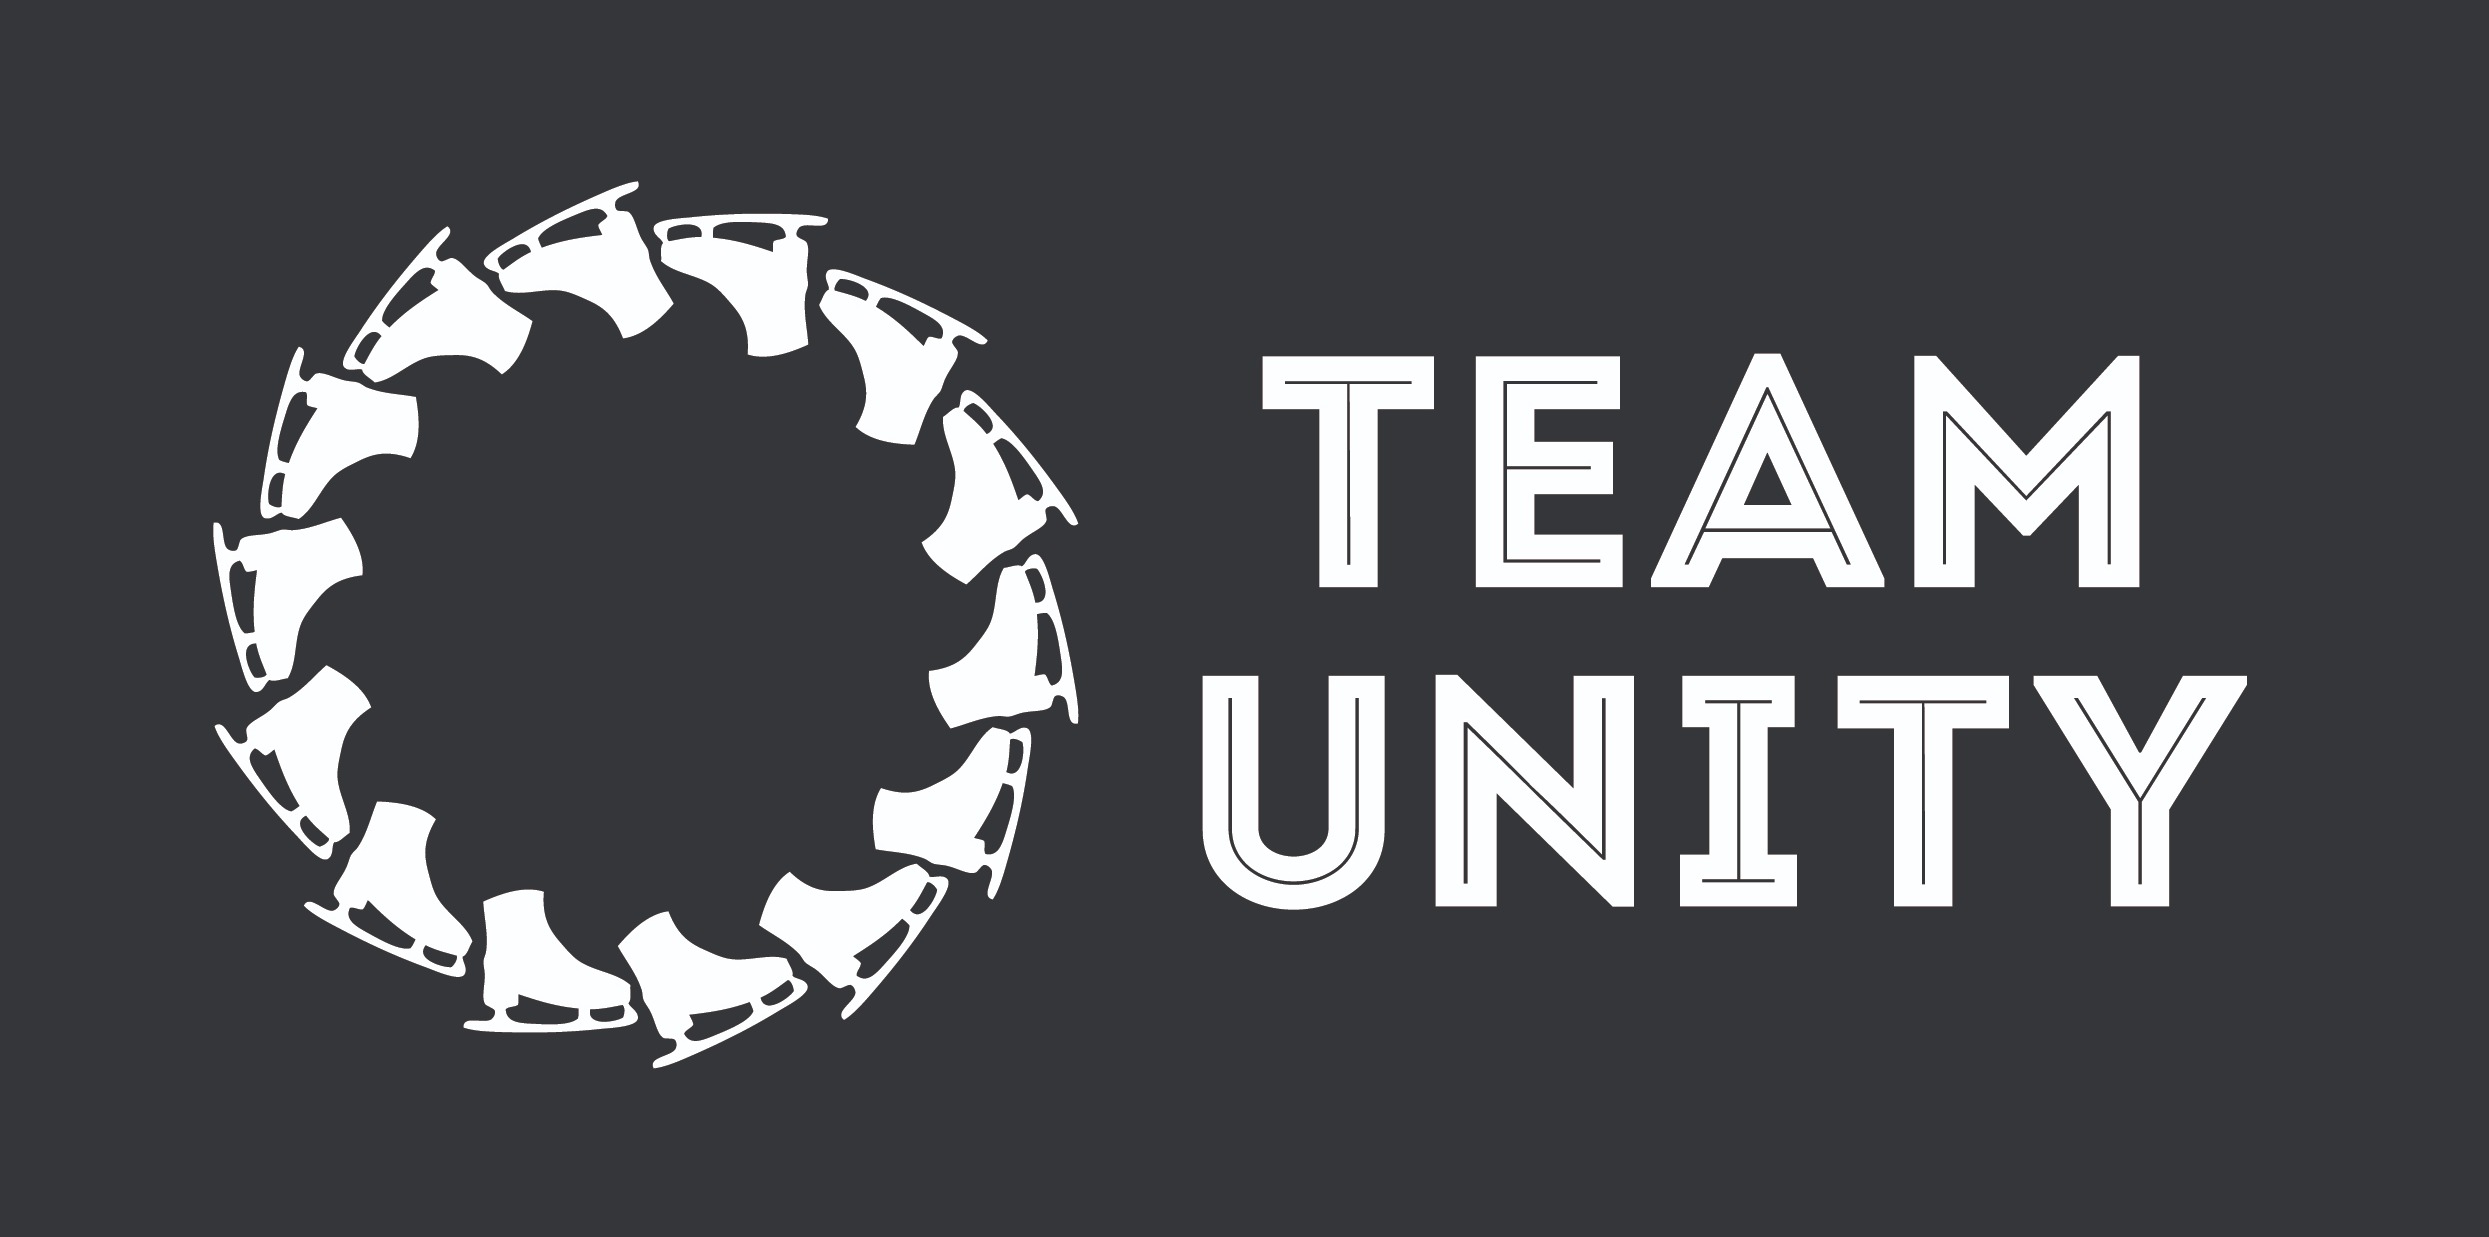 Community team group unity friend success health logo v27